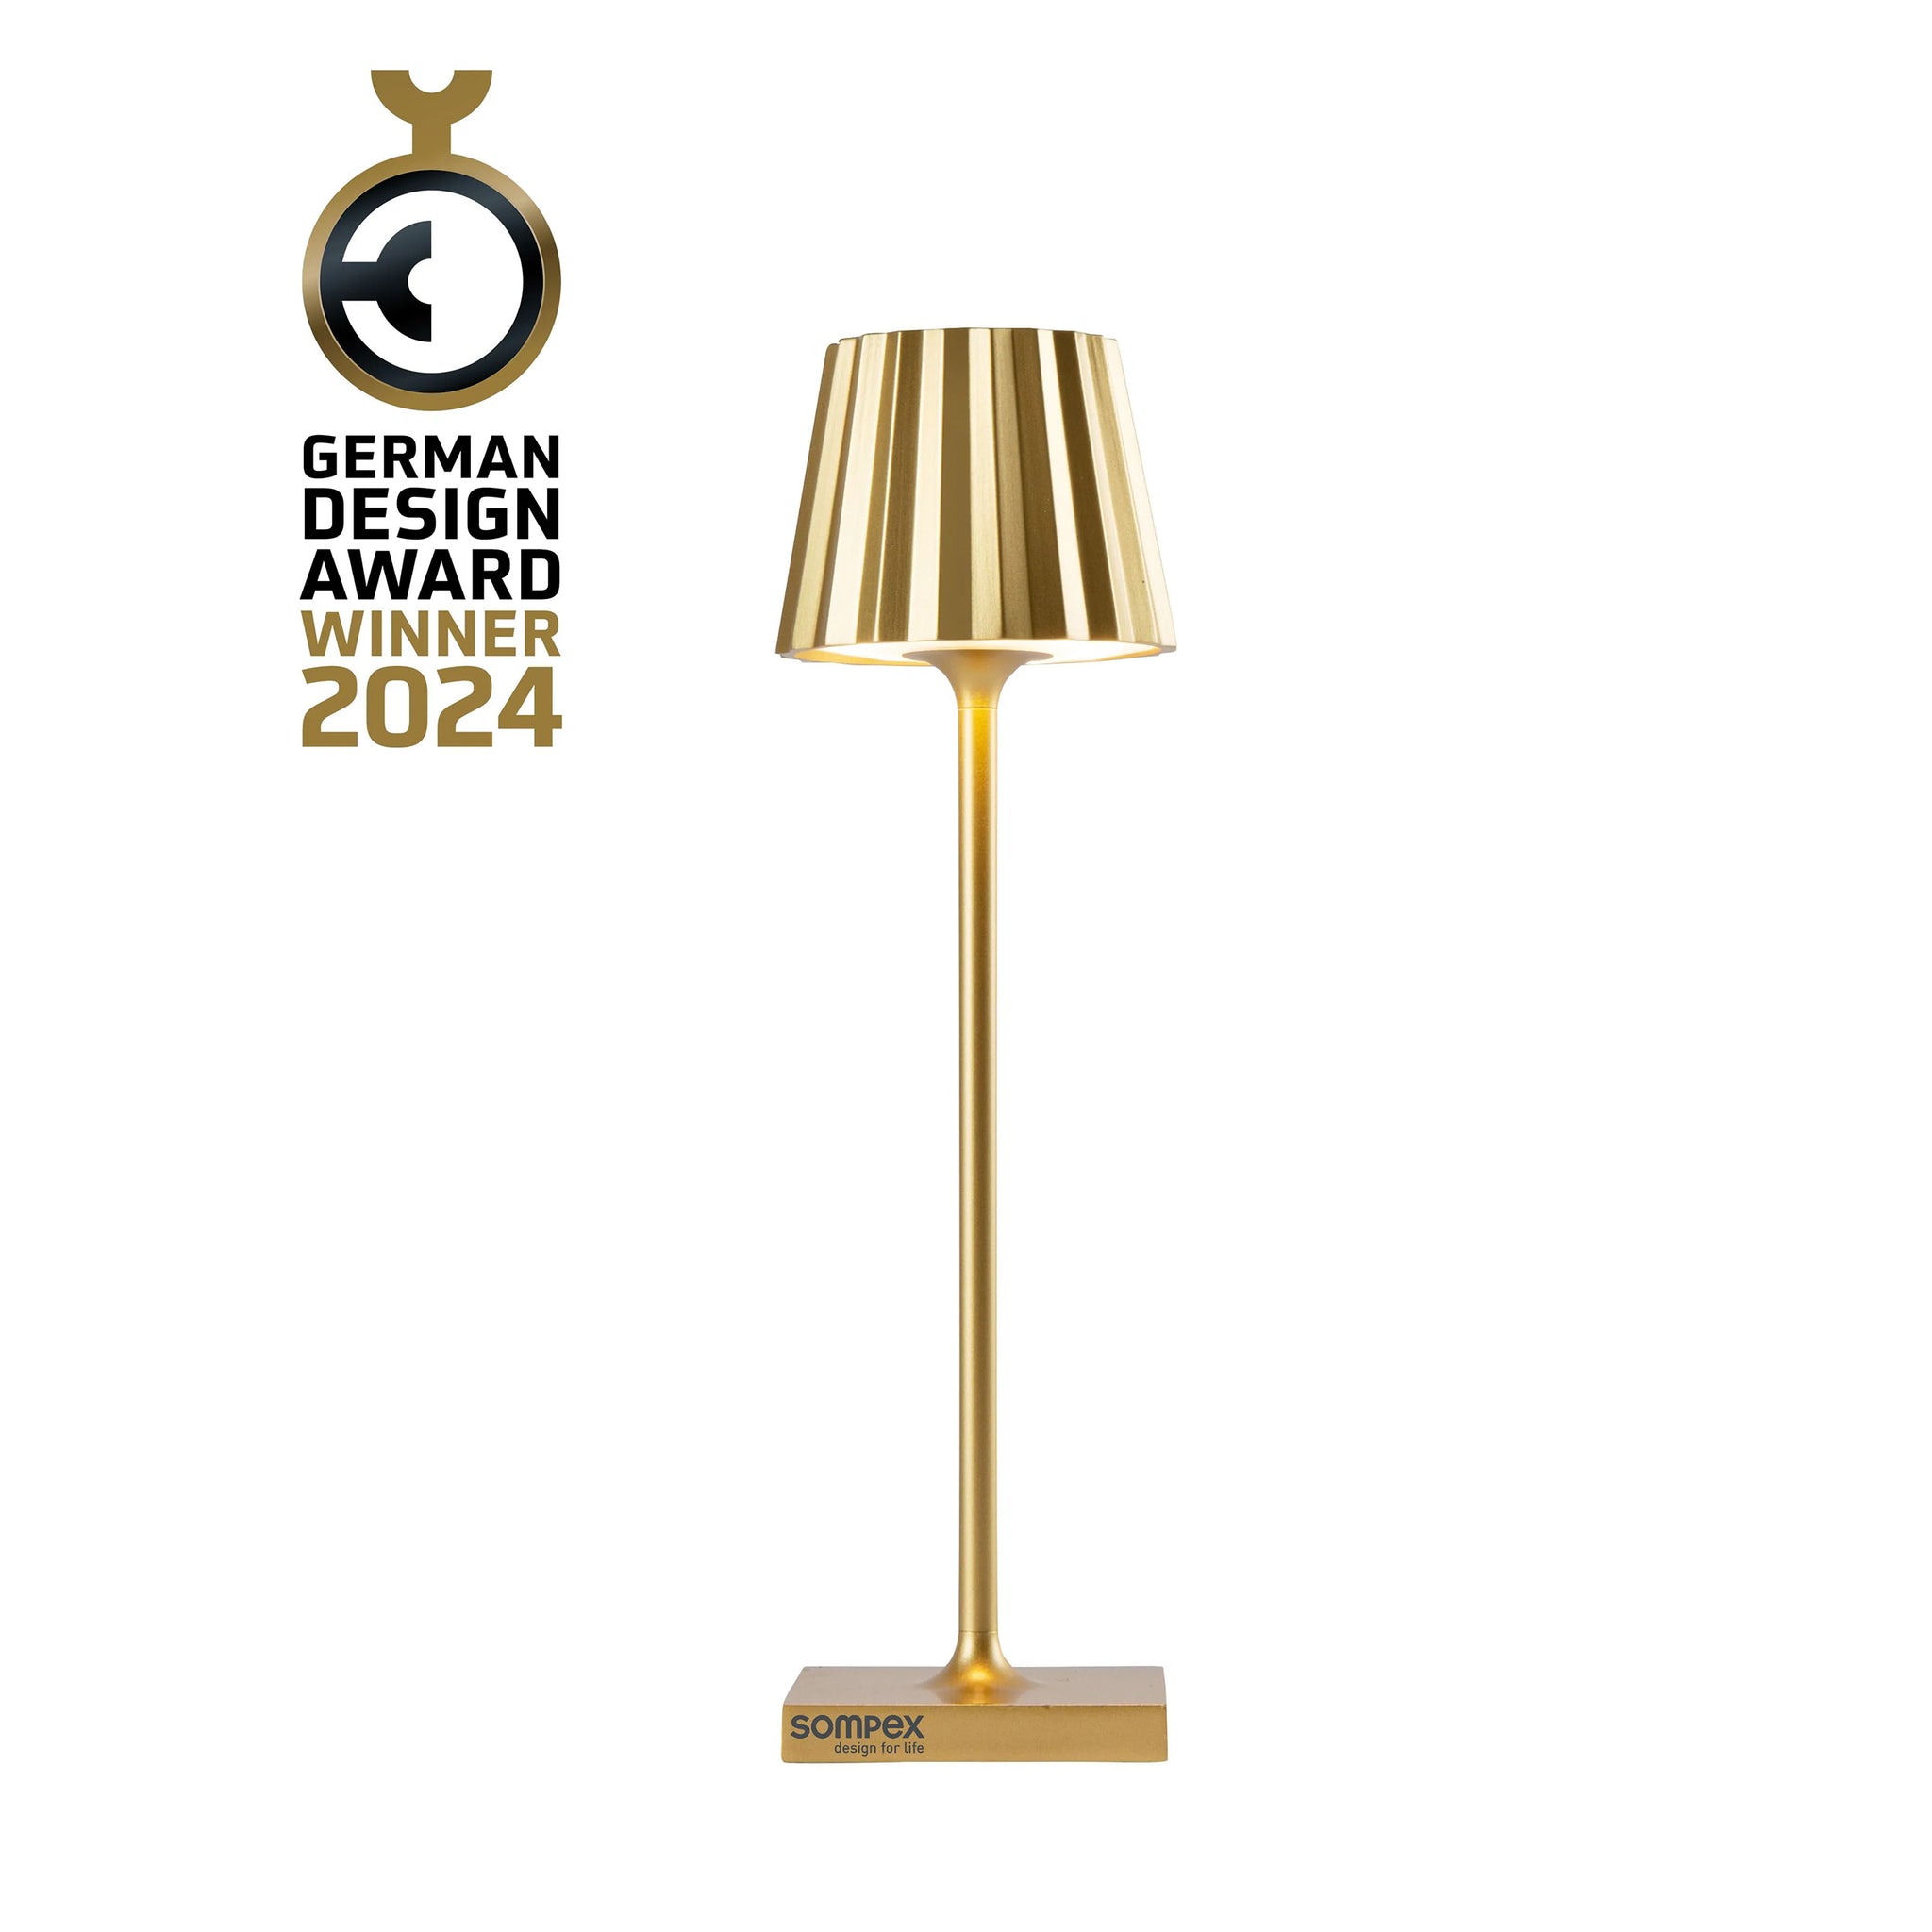 Sompex Troll Nano Goud│Oplaadbare Tafellamp│Buitenverlichting│art. 78587│logo German Design Award Winner 2024